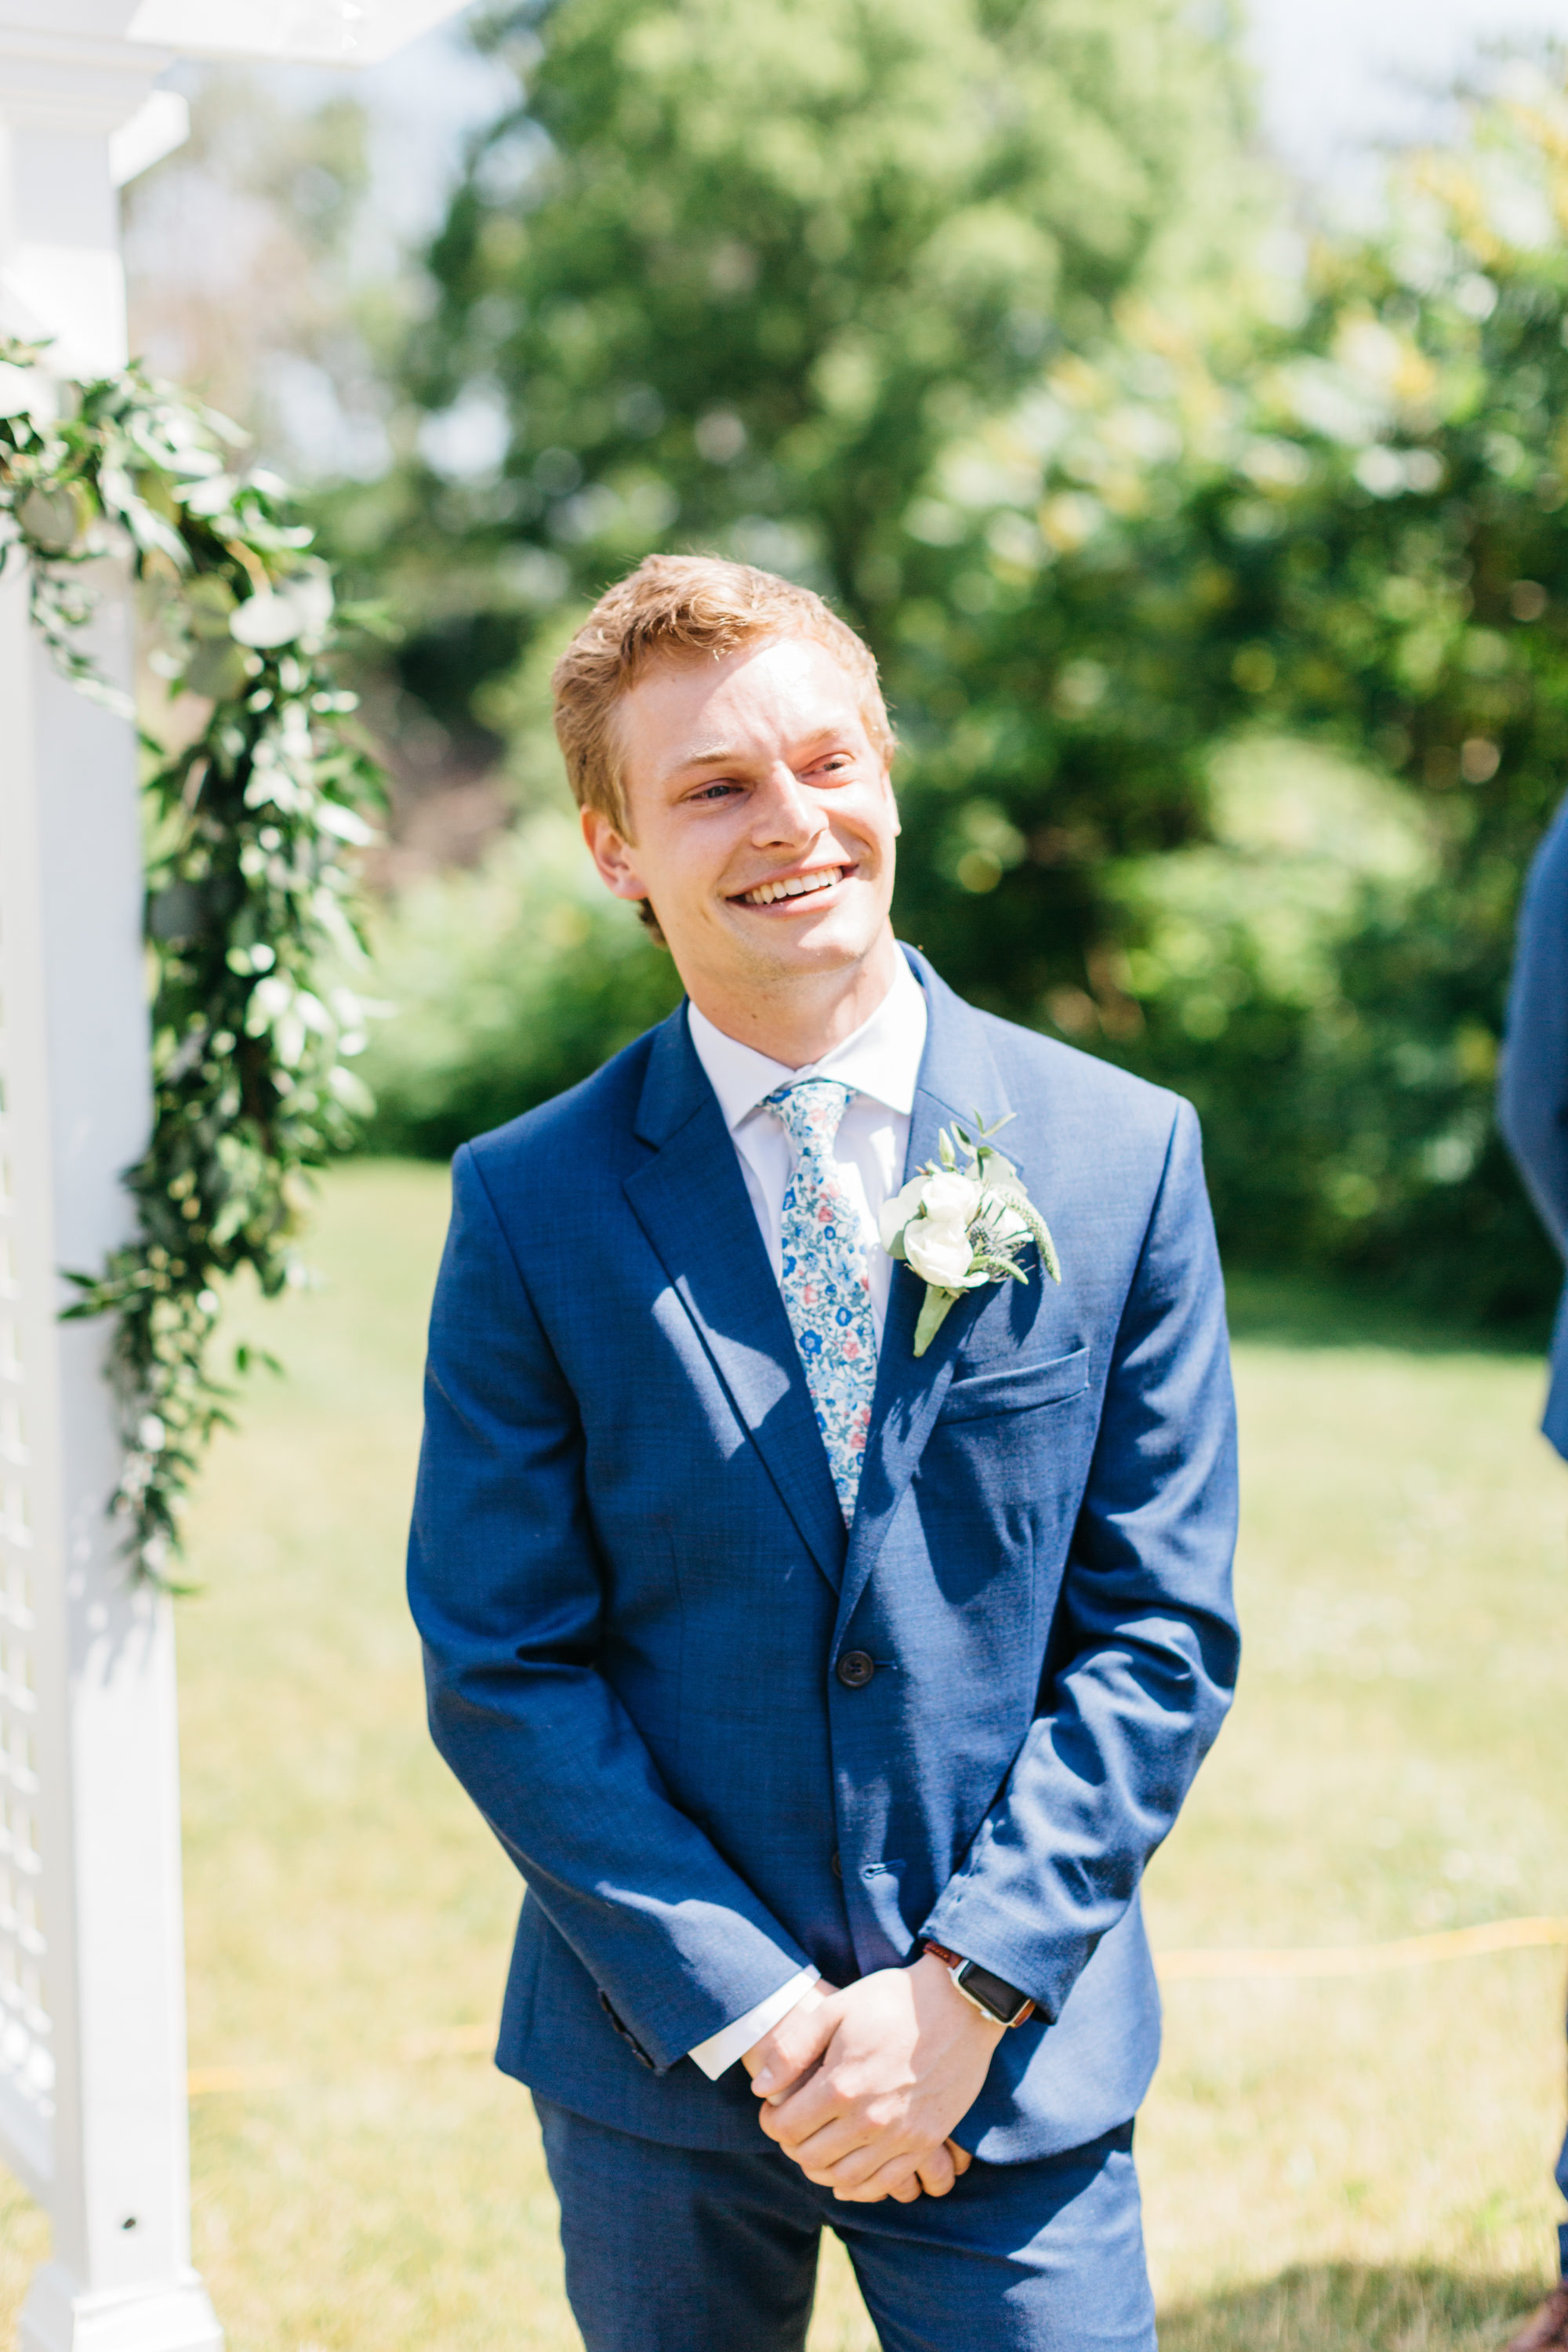 Groom smiling at his bride